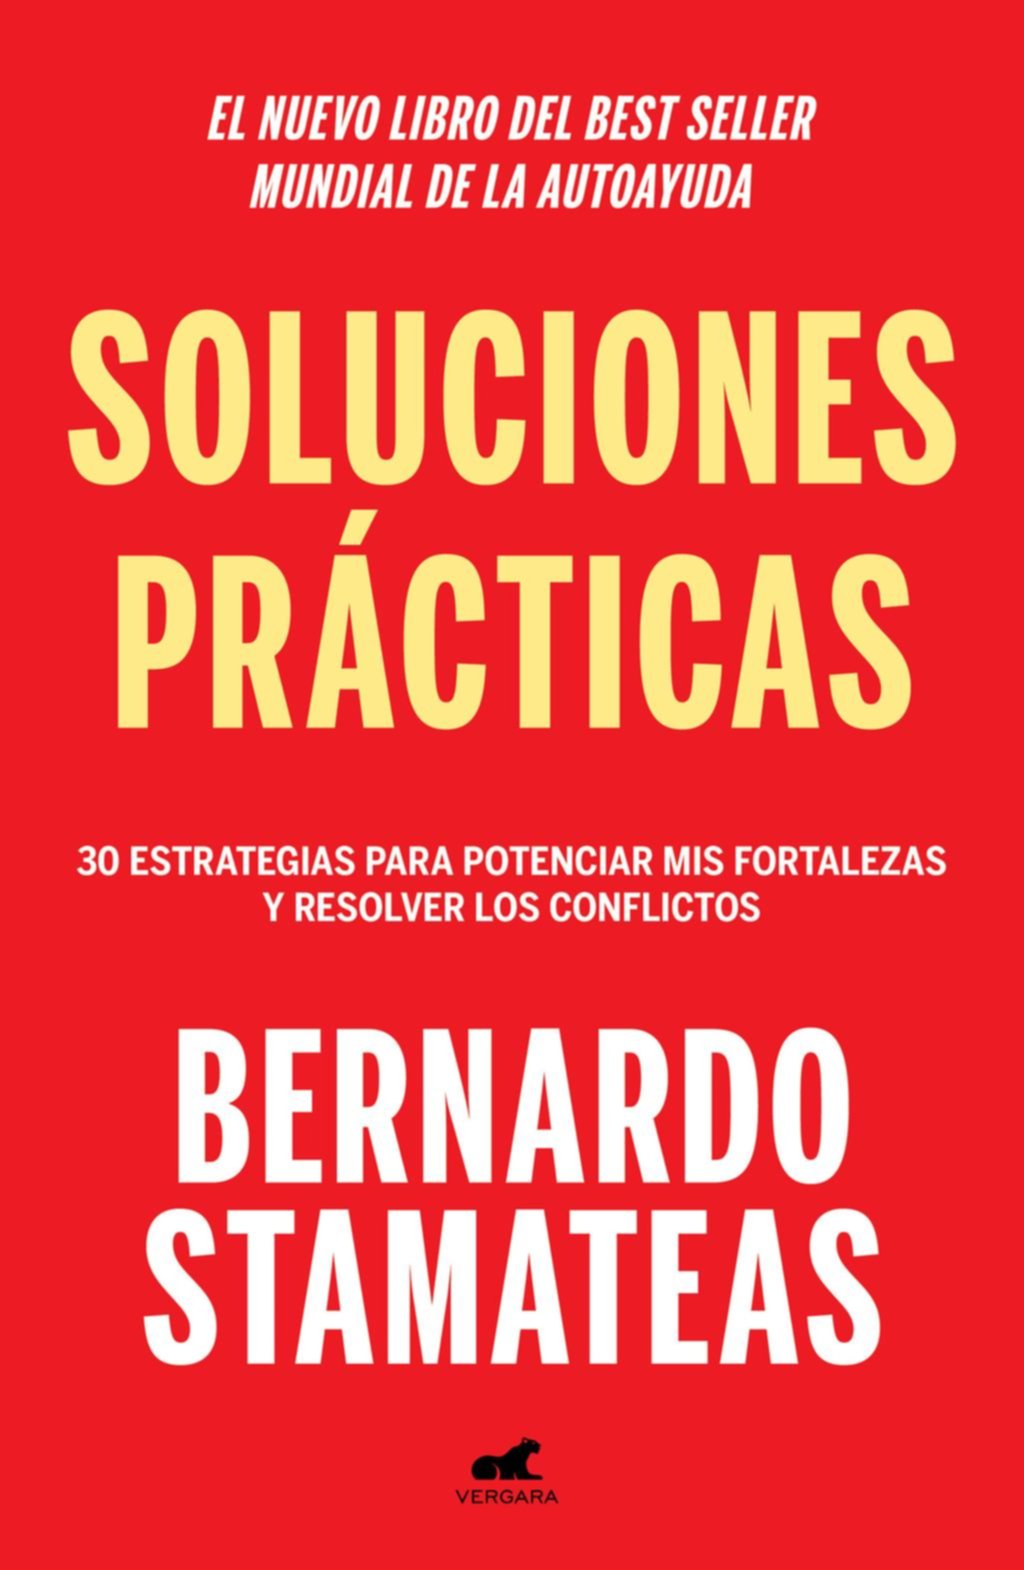 Soluciones prácticas Bernardo Stamateas